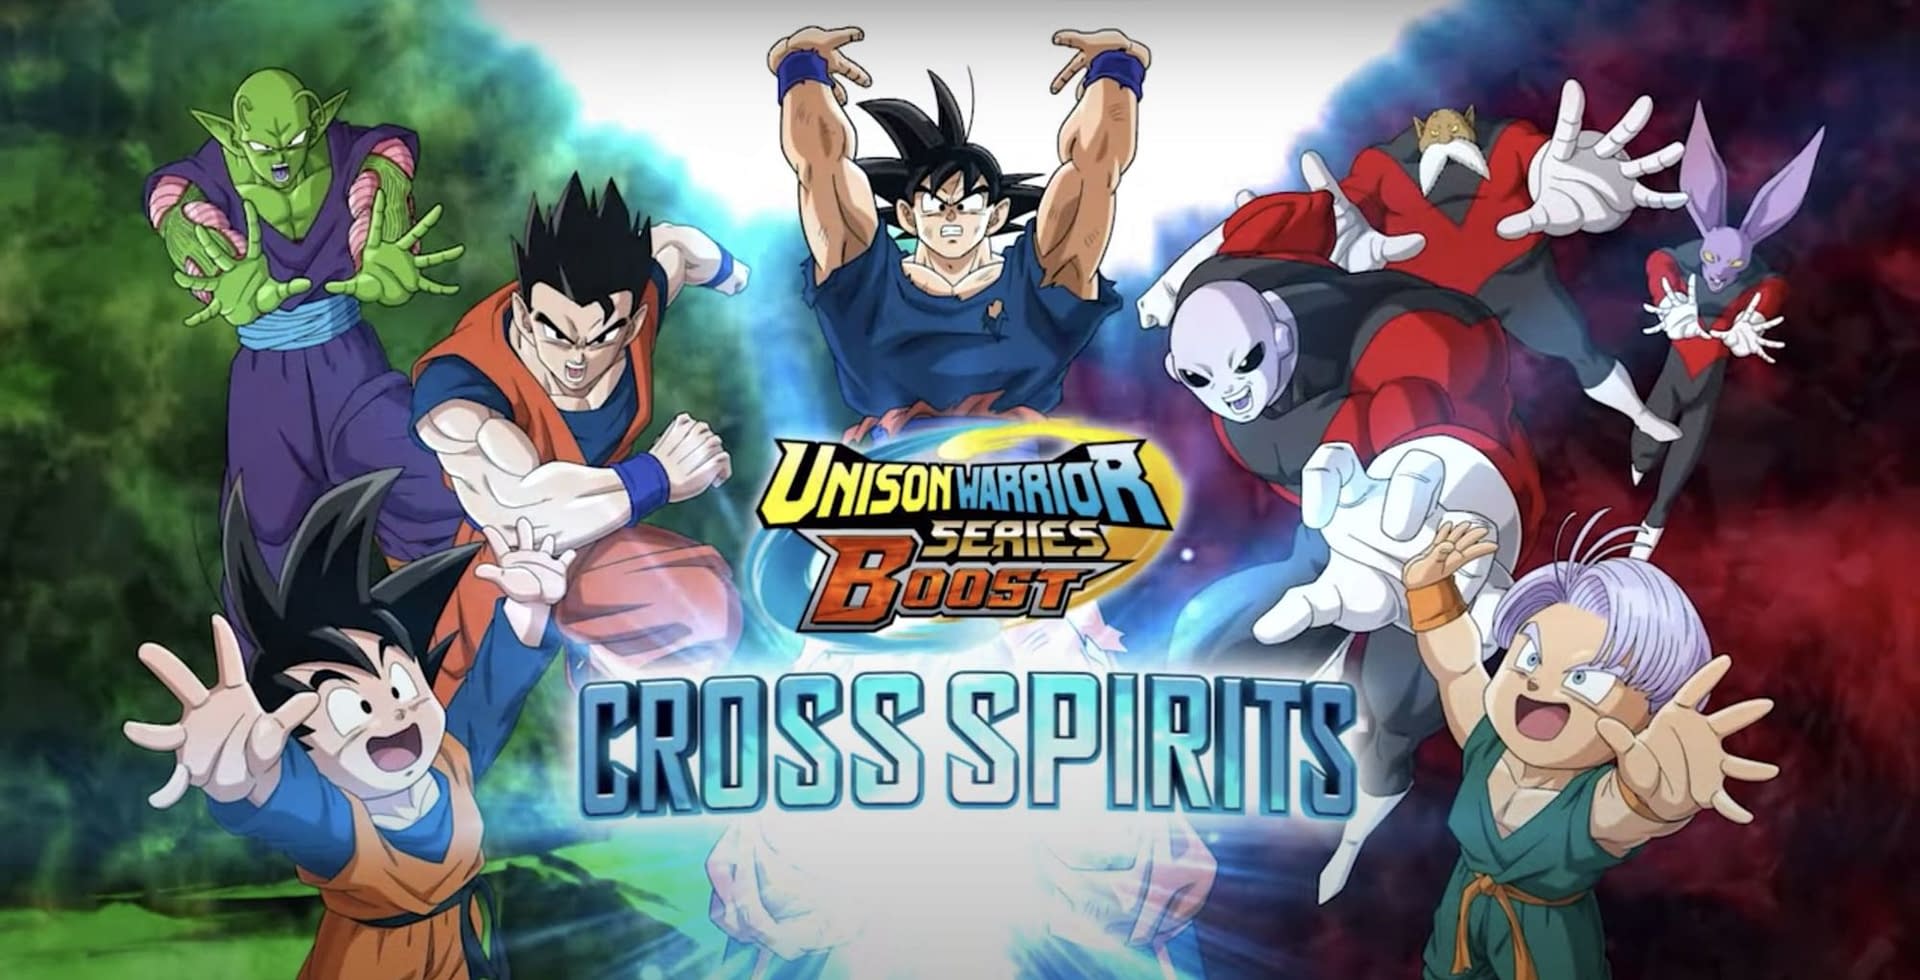 Dragon Ball Super Card Game Announces Next Expansion Cross Spirits